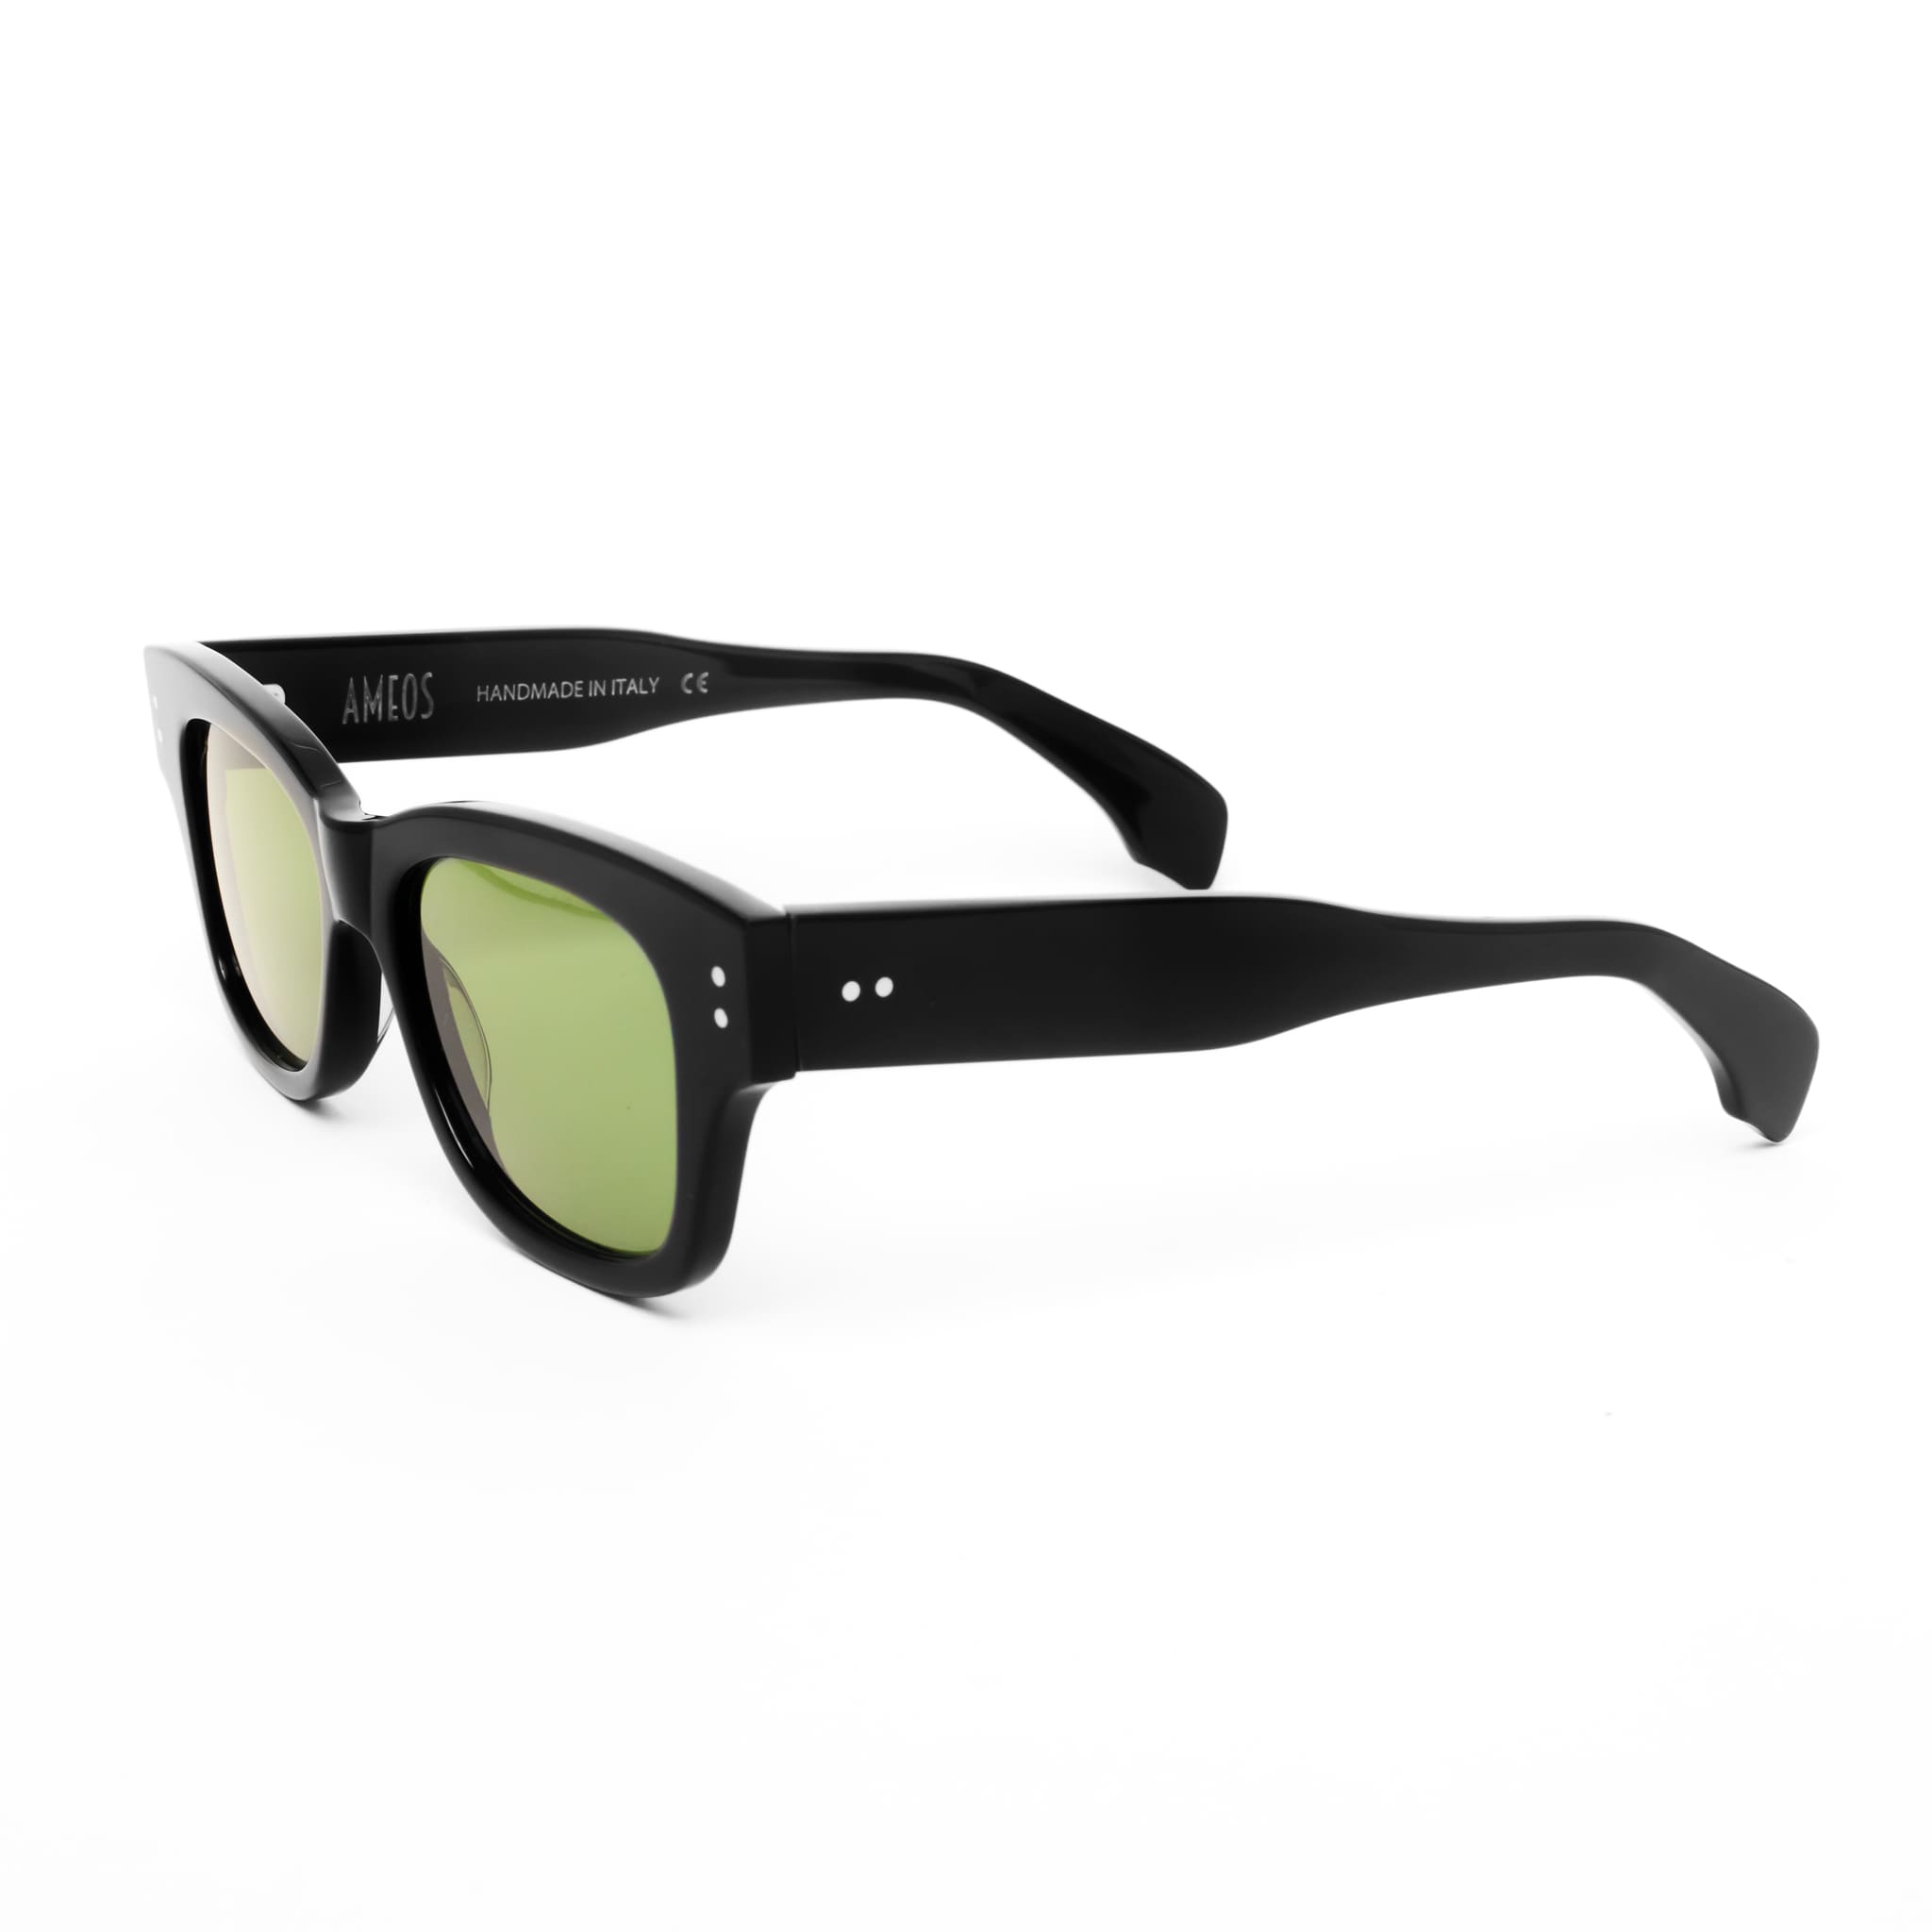 Ameos Forever collection Rio model. Black frames with dark green lenses. Side view. Genderless, gender neutral eyewear